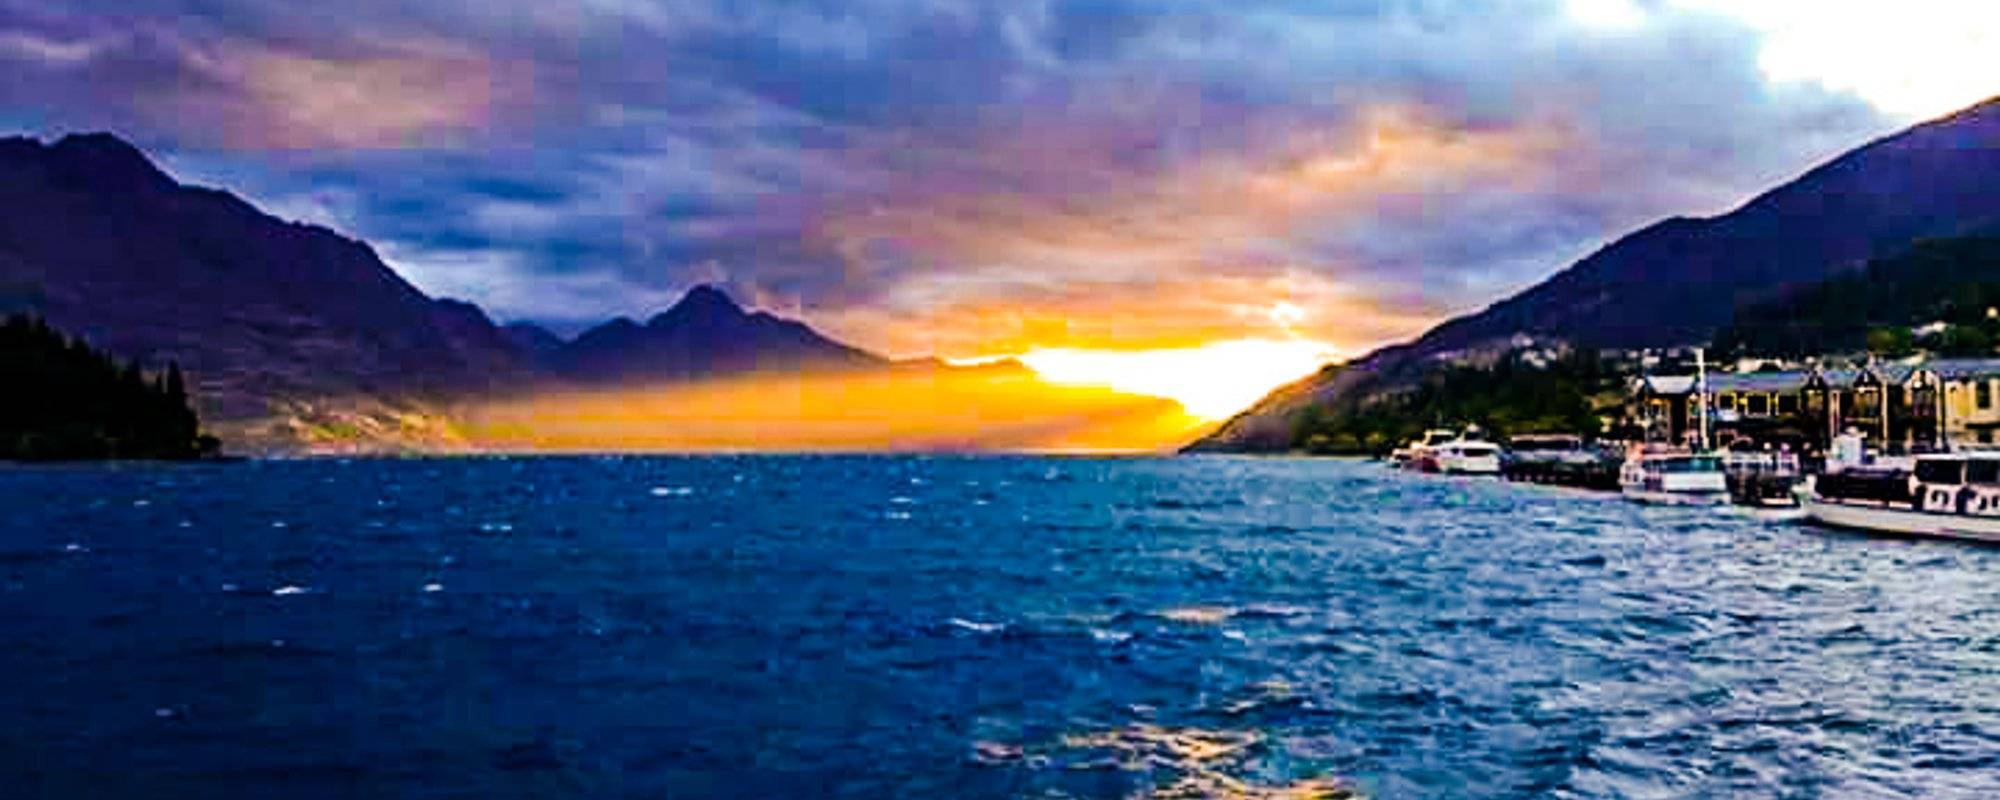 Milford Sound - The Hidden Beauty of New Zealand!